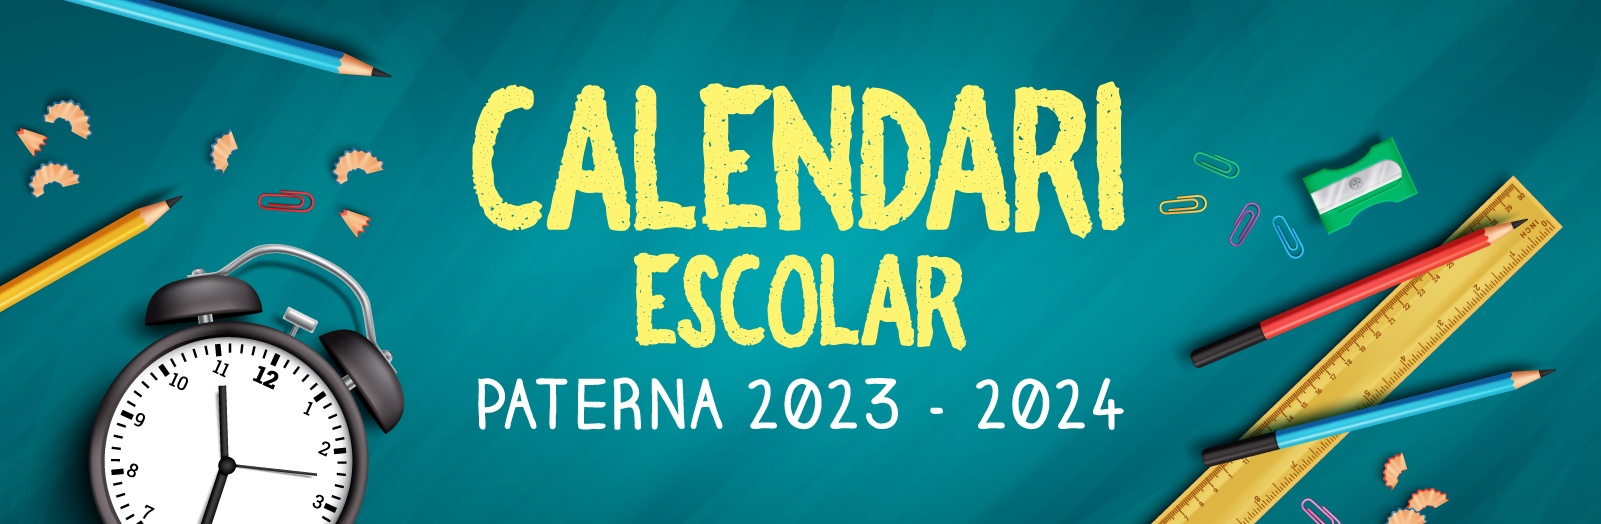 Calendari Escolar 2023-2024